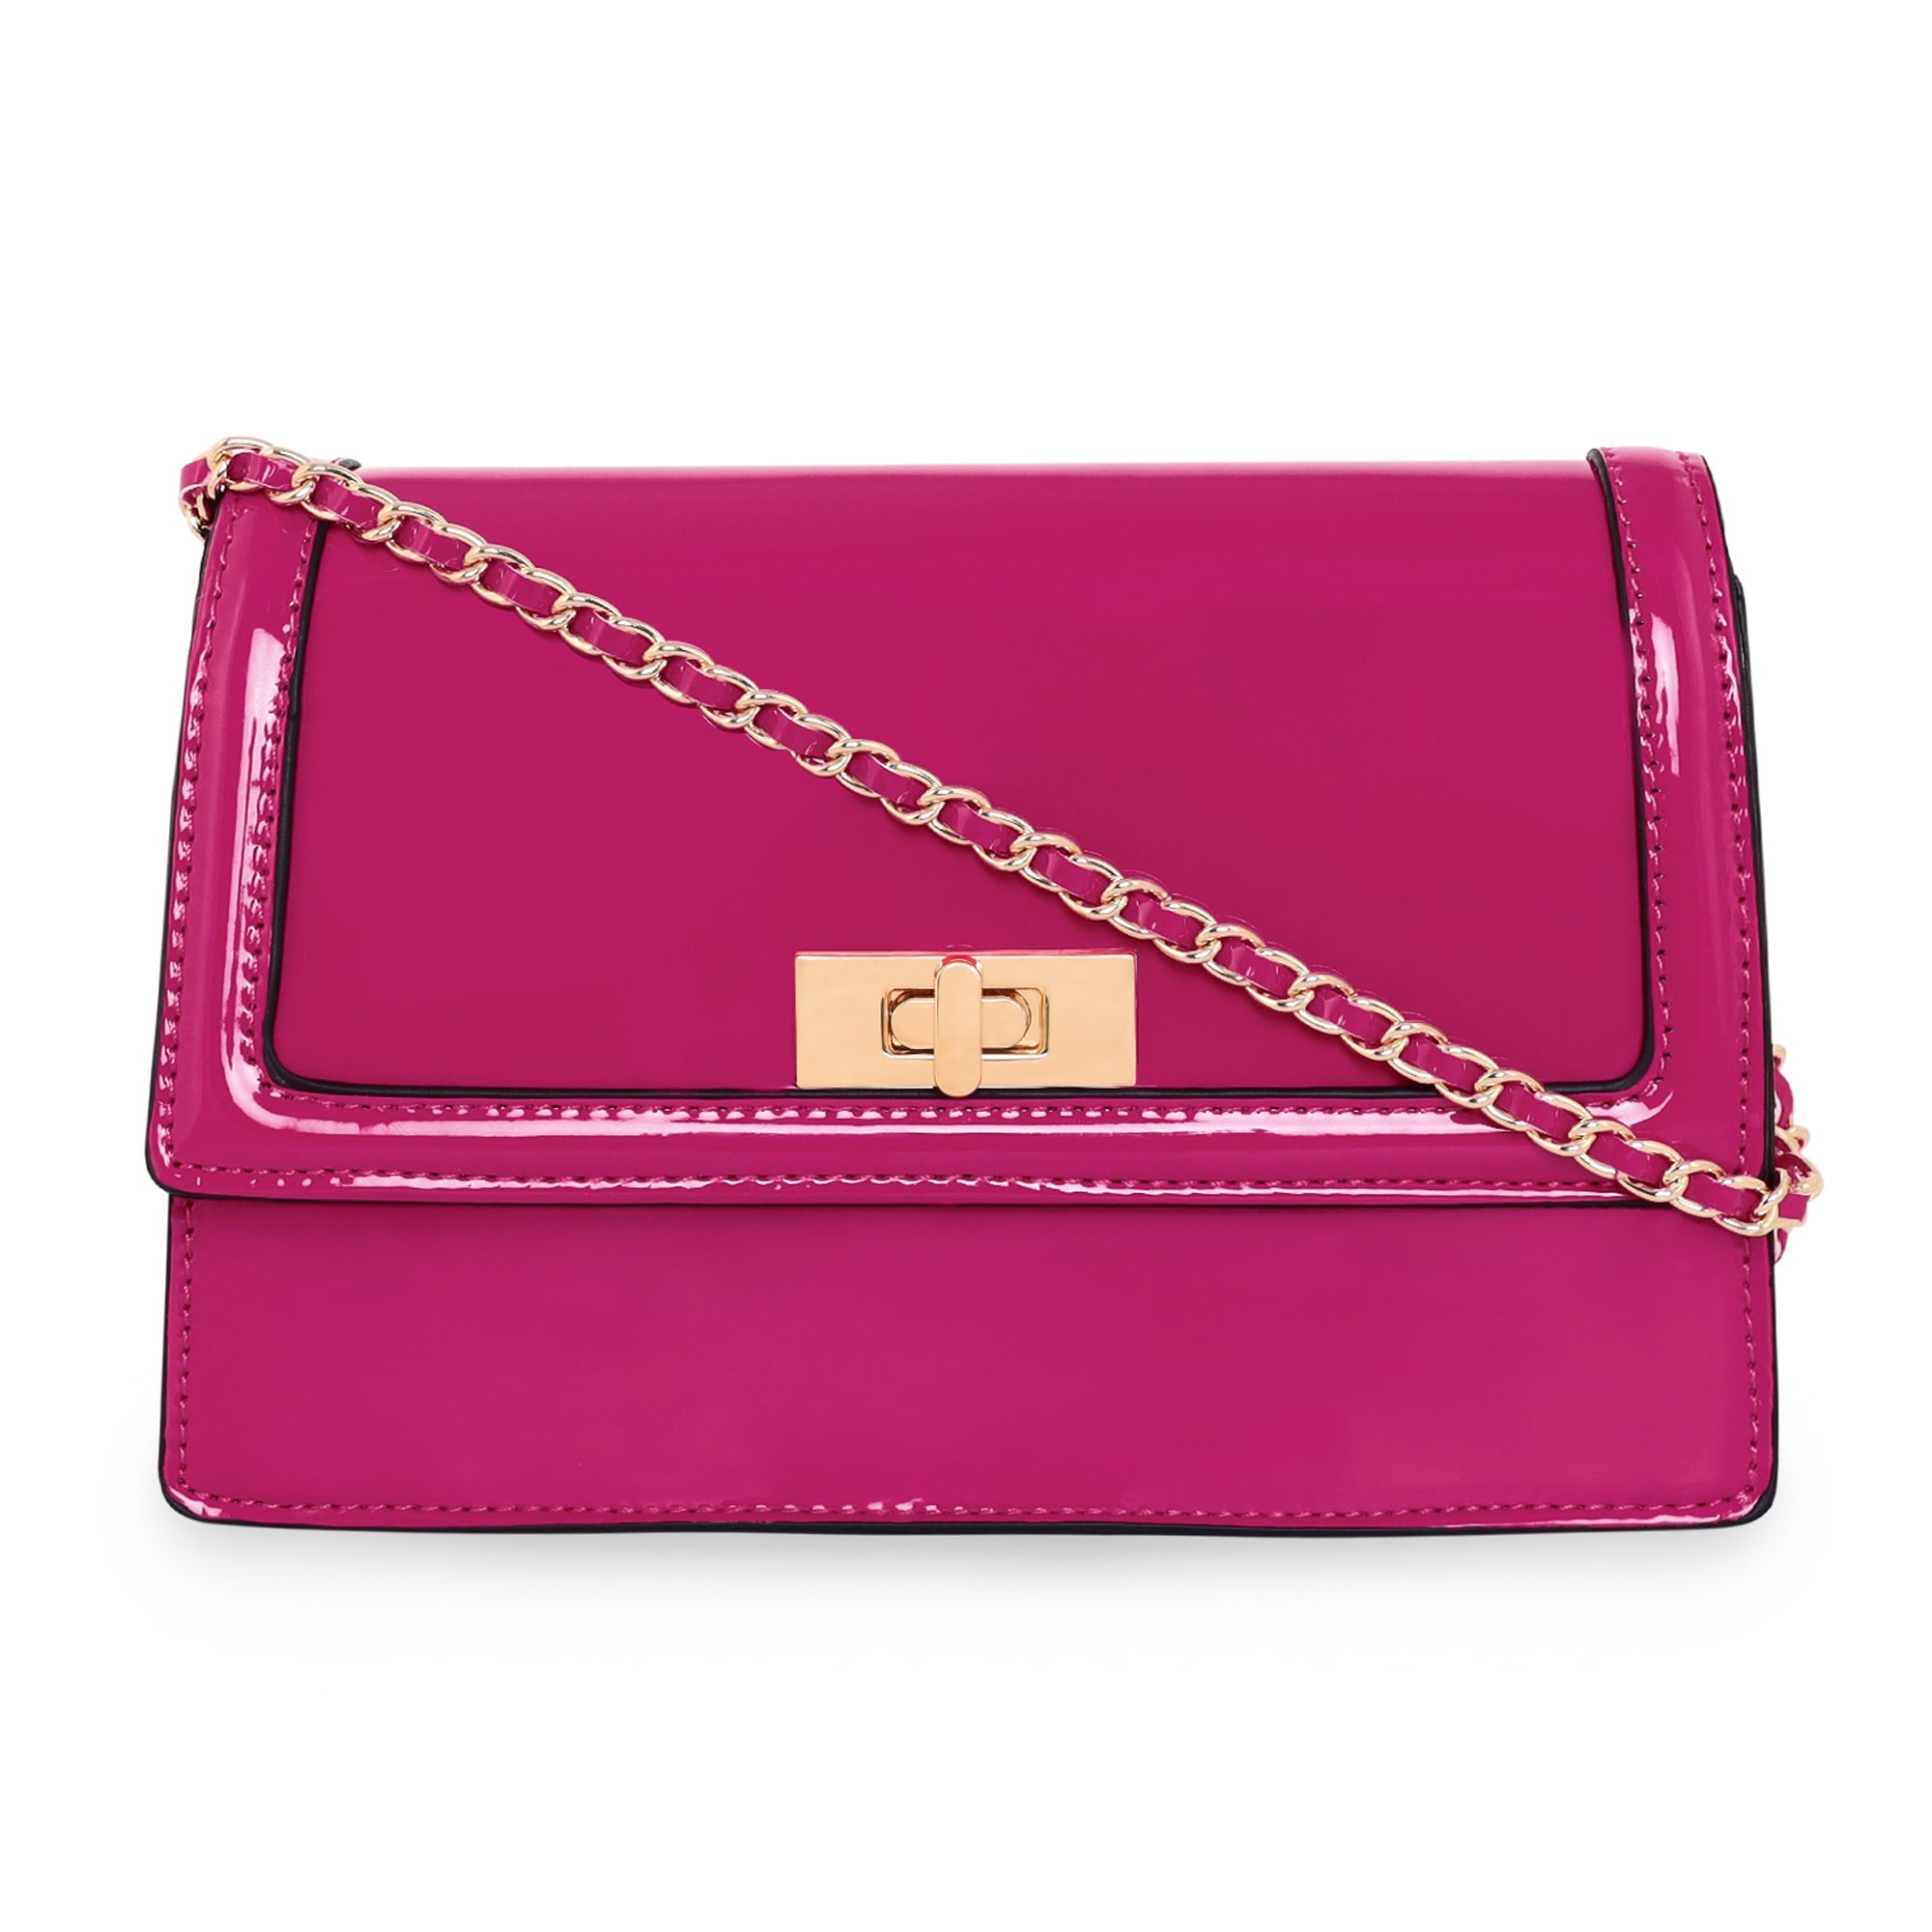 Accessorize London Women's Amelia Patent Pink Sling Bag